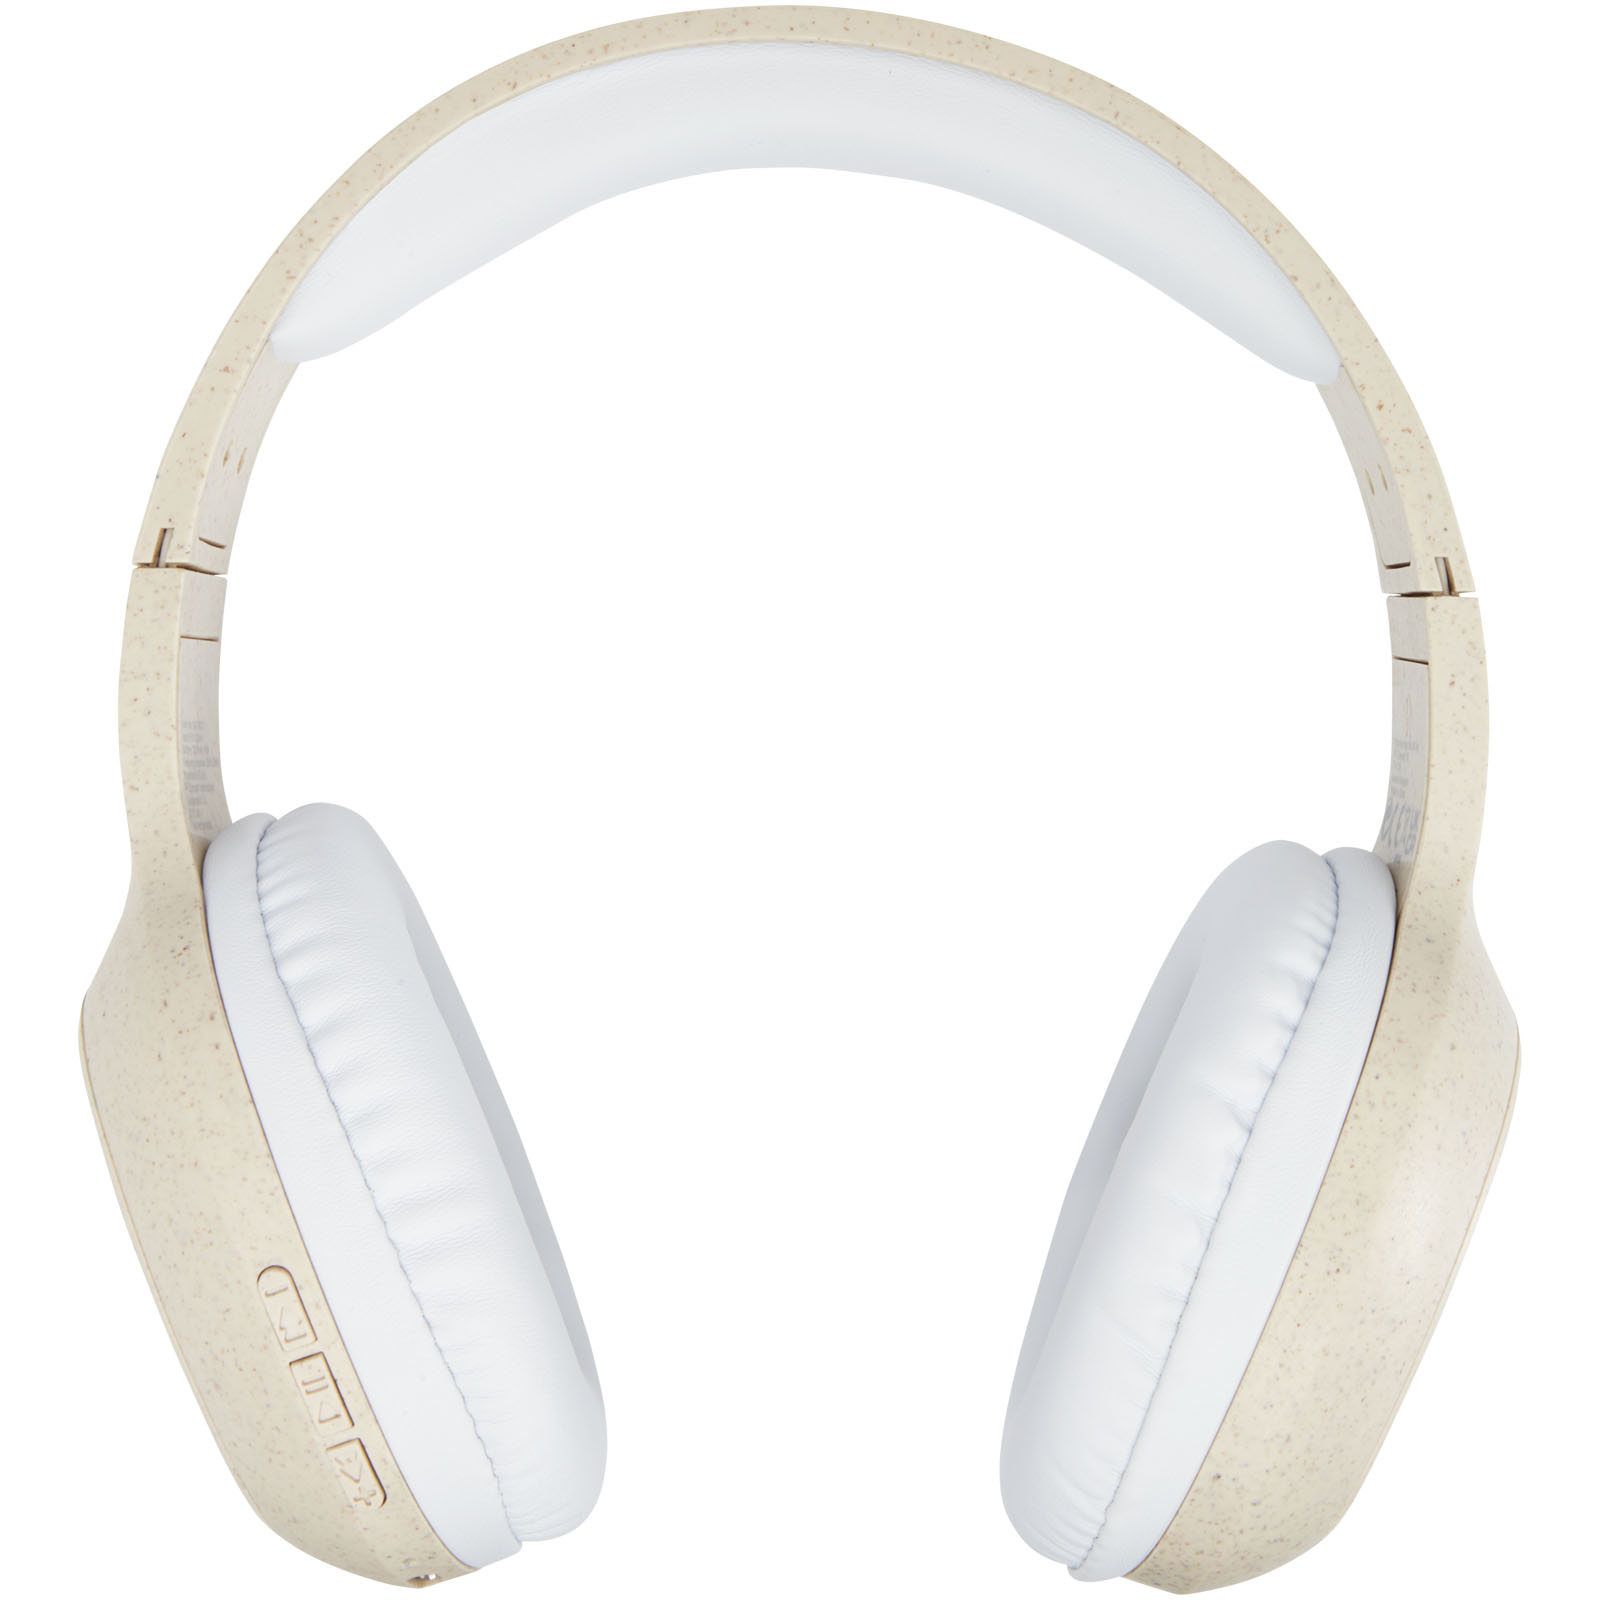 Advertising Headphones - Riff wheat straw Bluetooth® headphones with microphone - 2